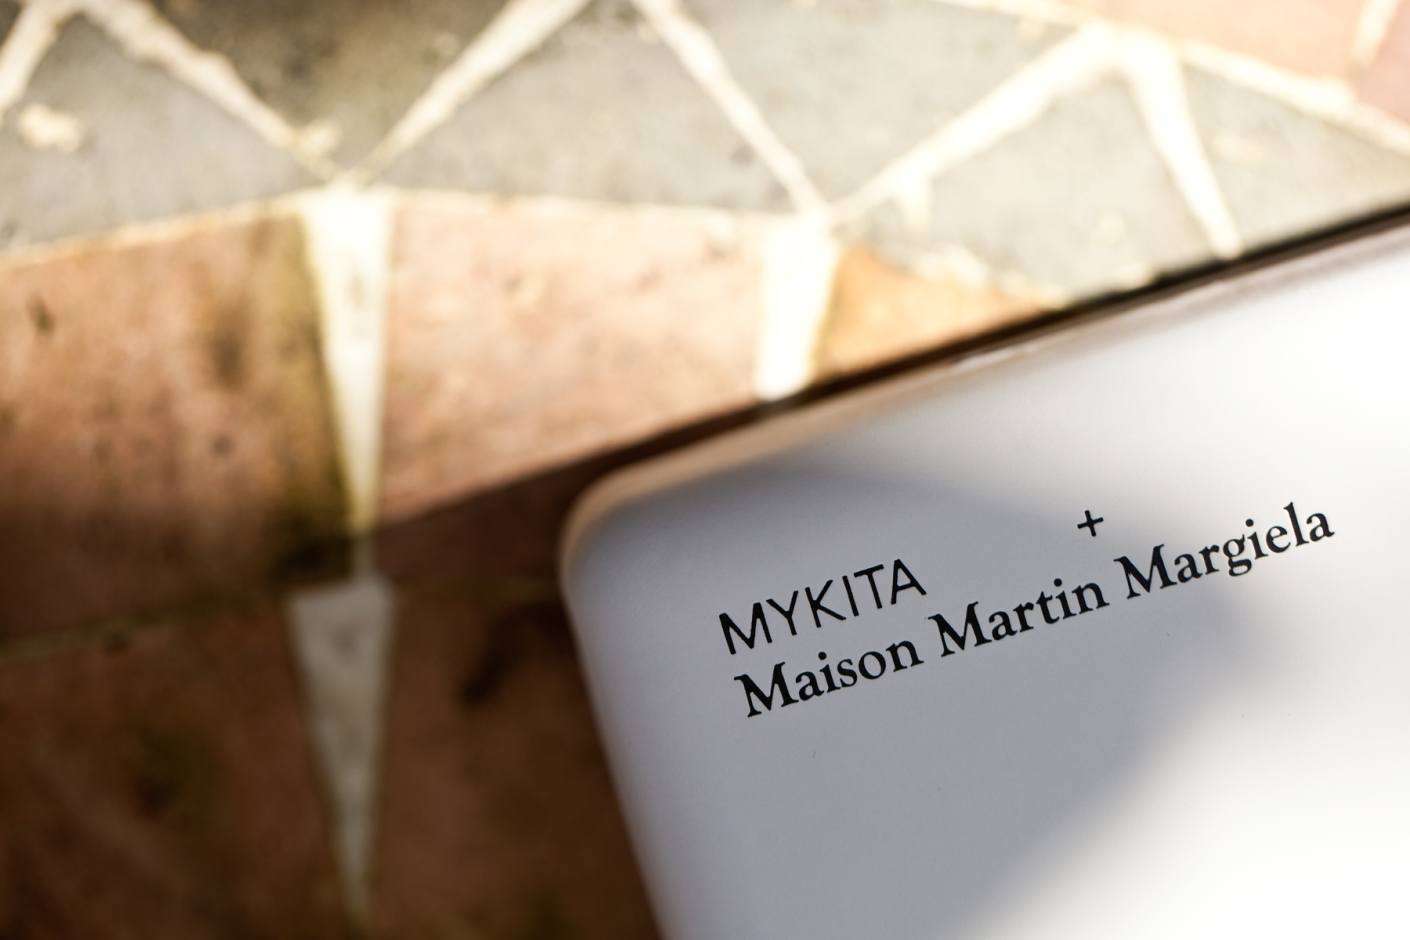 Солнцезащитные очки Maison Martin Margiela x MYKITA “Dual” сезона Лето 2014